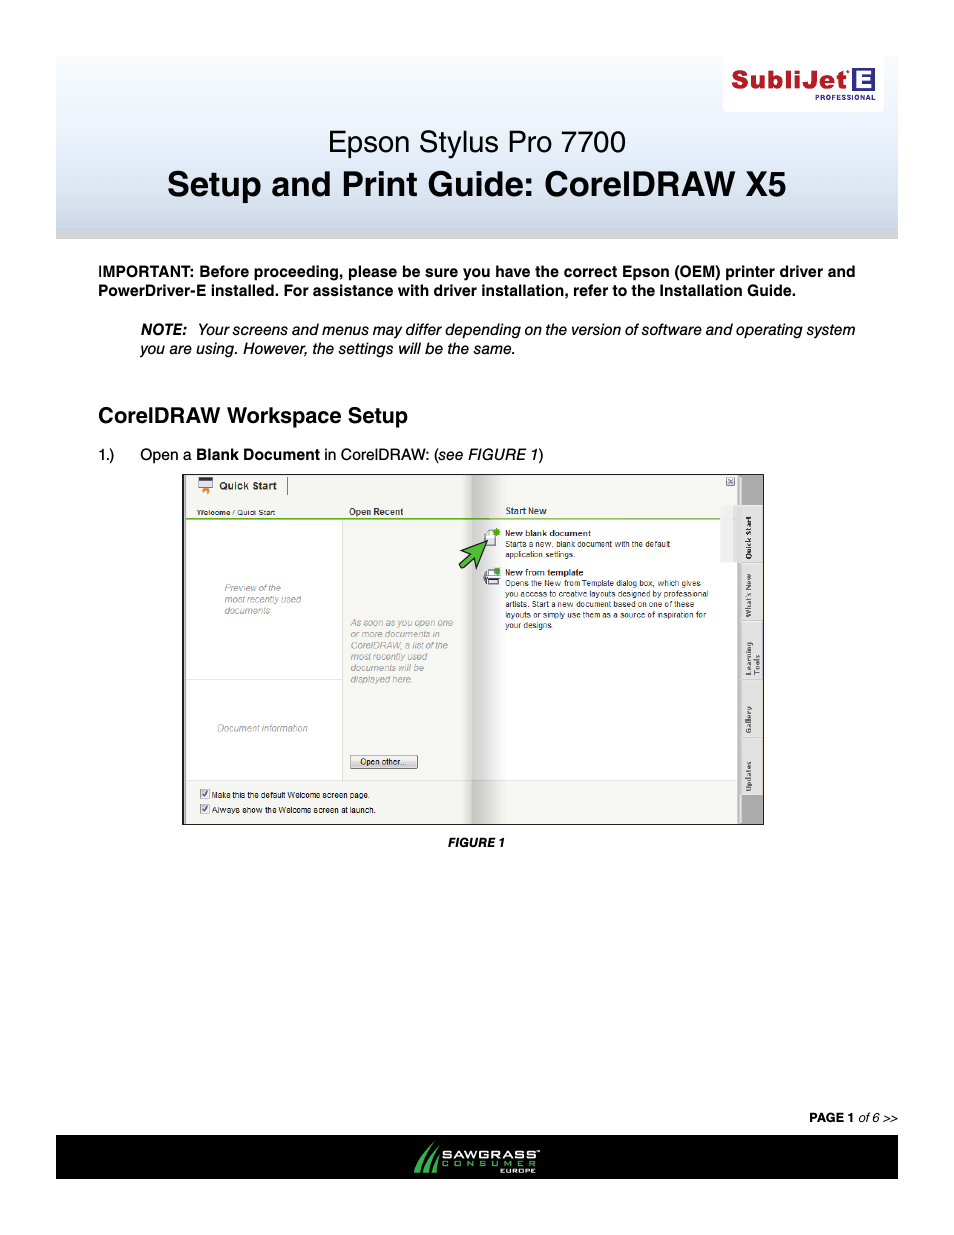 SubliJet E Epson Stylus Pro 7700 (Windows Power Driver Setup): Print & Setup Guide CorelDRAW X5